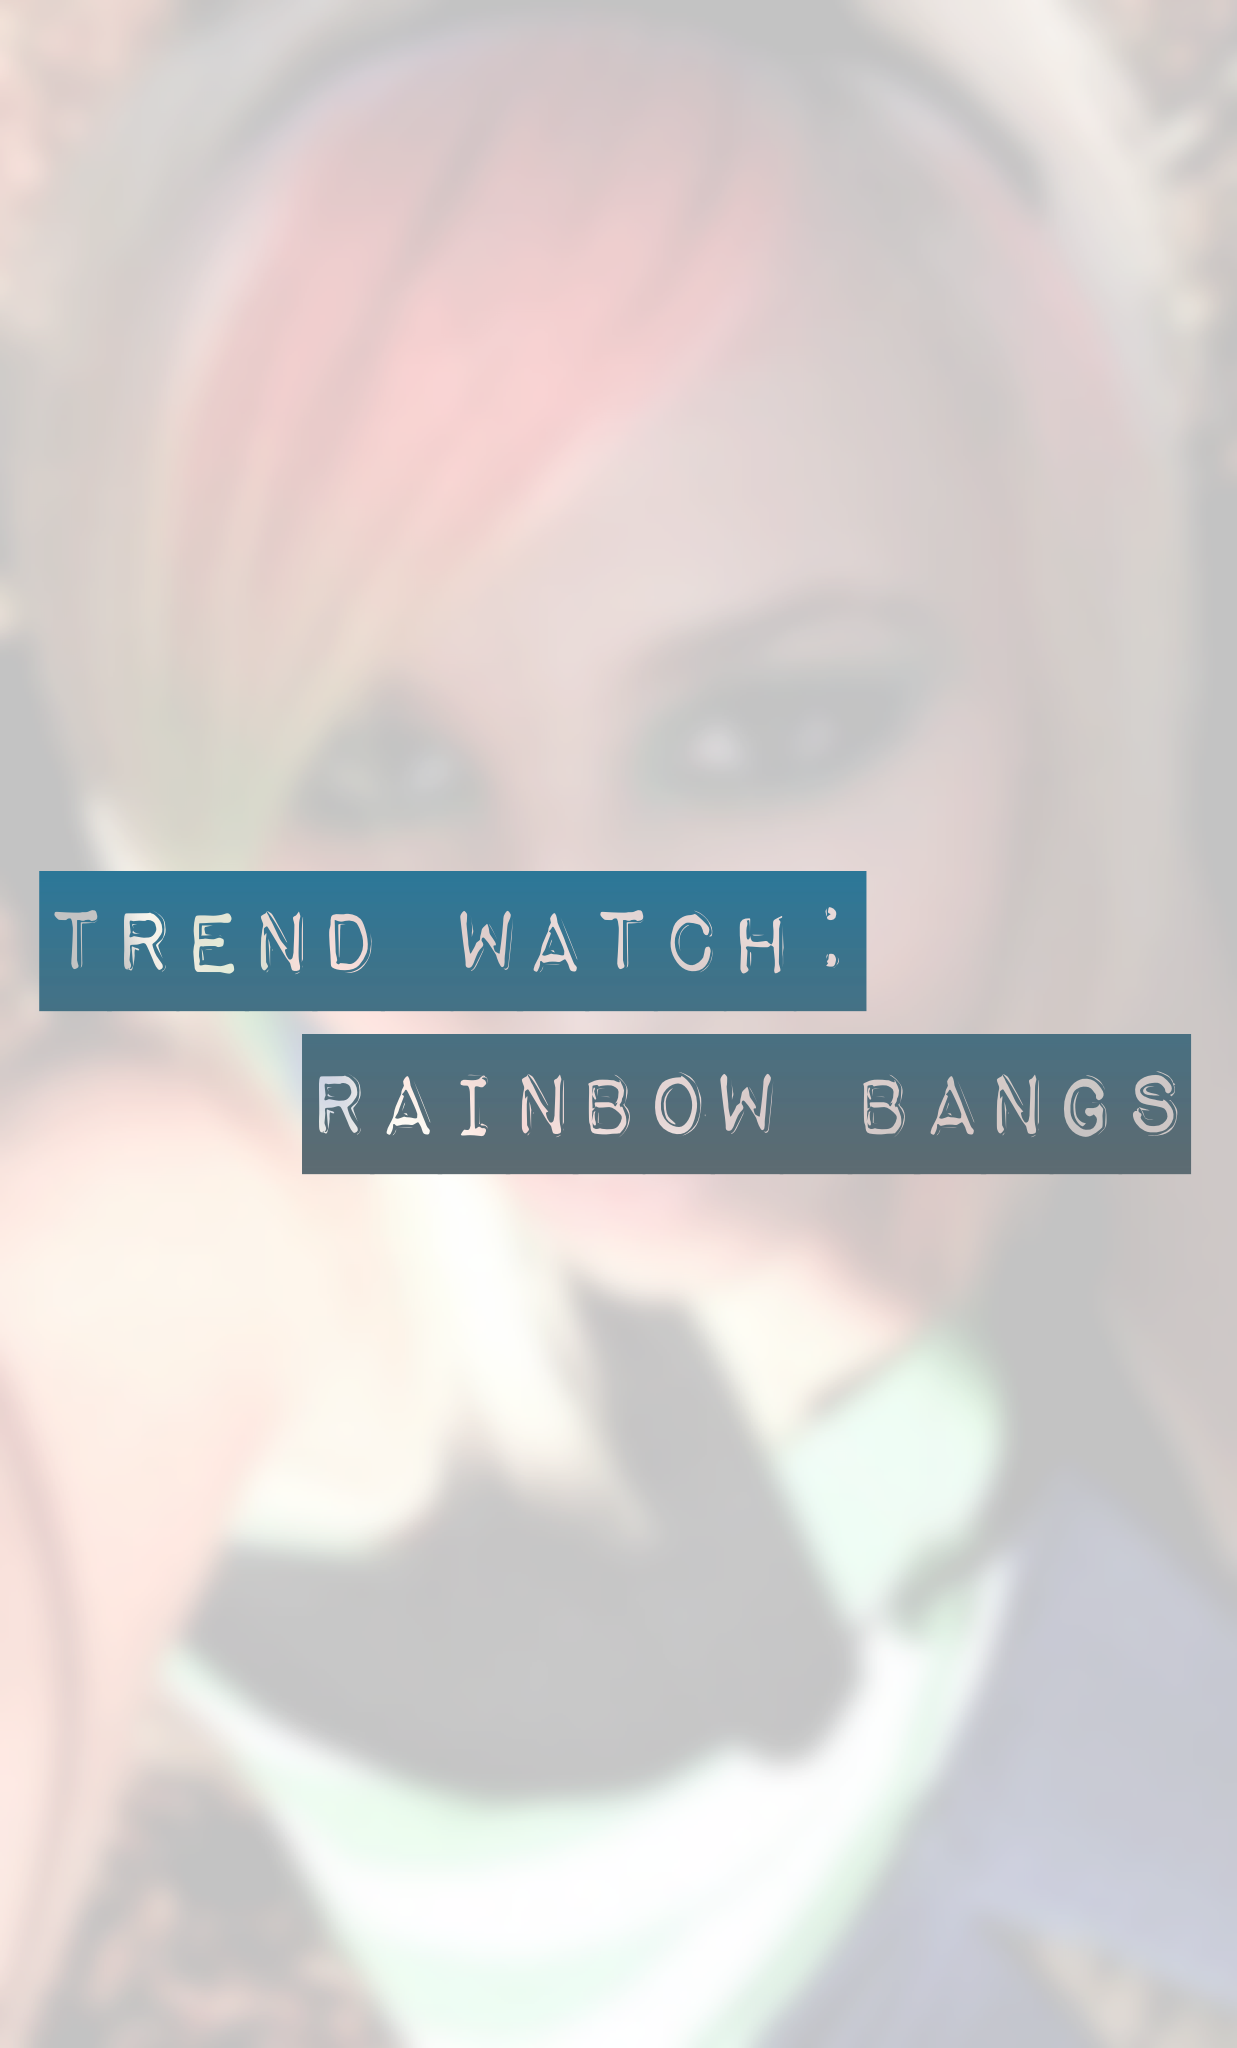 Trend Watch: Rainbow Bangs